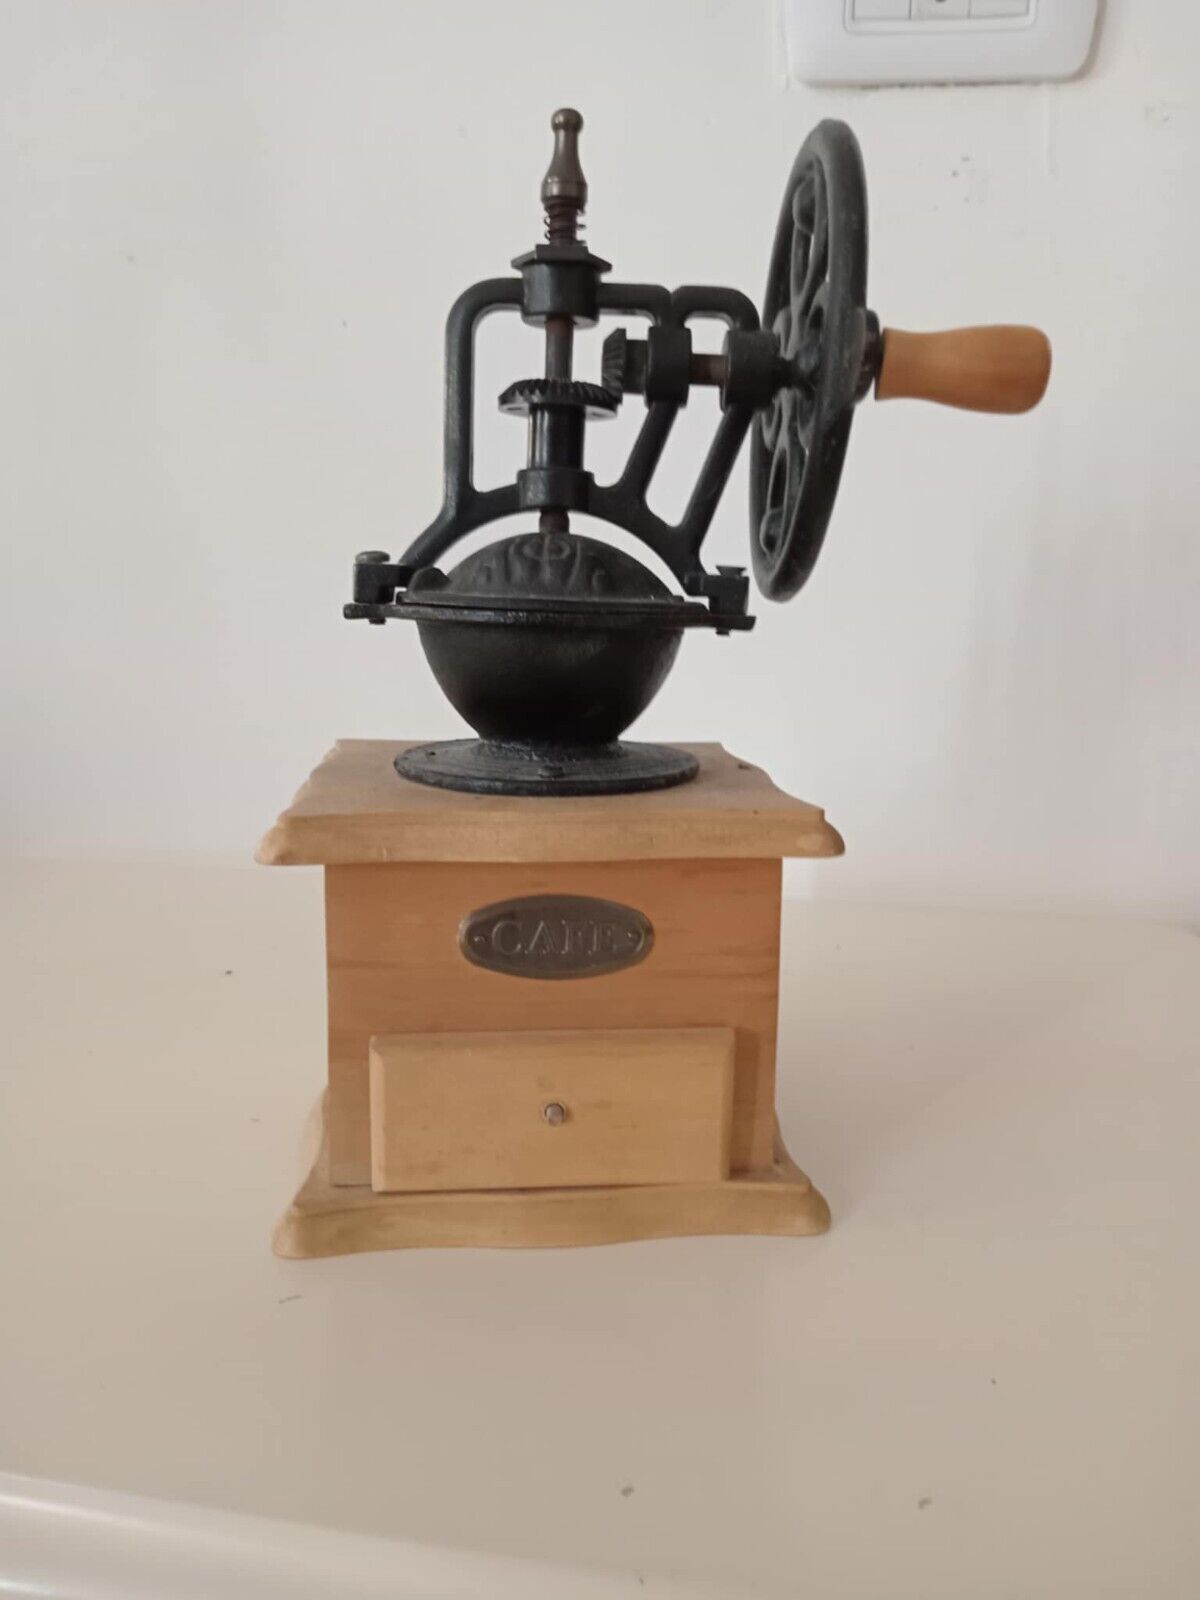 Antique Coffee Grinder - Vintage Hand Crank Mill, Rustic Decor